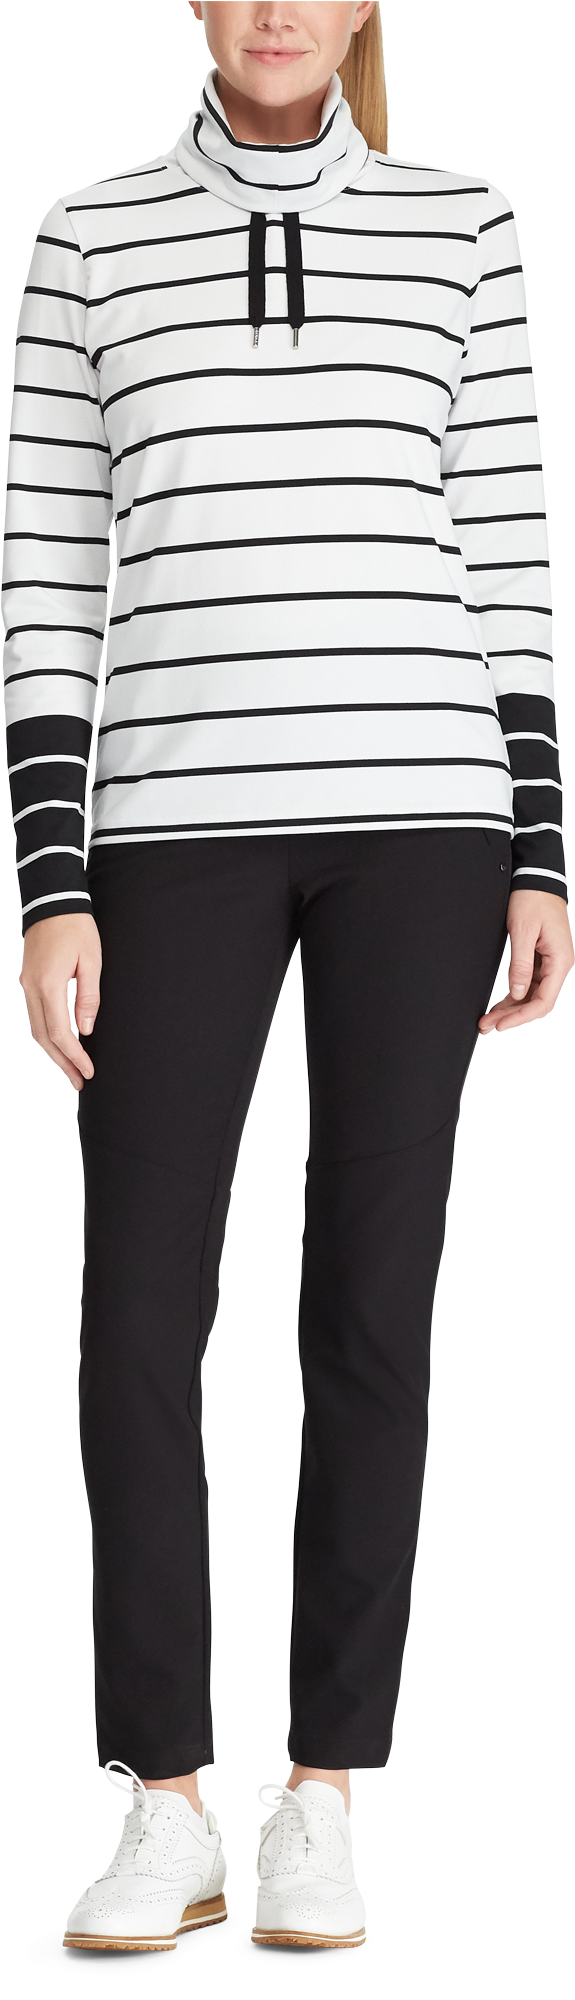 Striped Turtleneck Sweaterand Black Pants Fashion PNG image